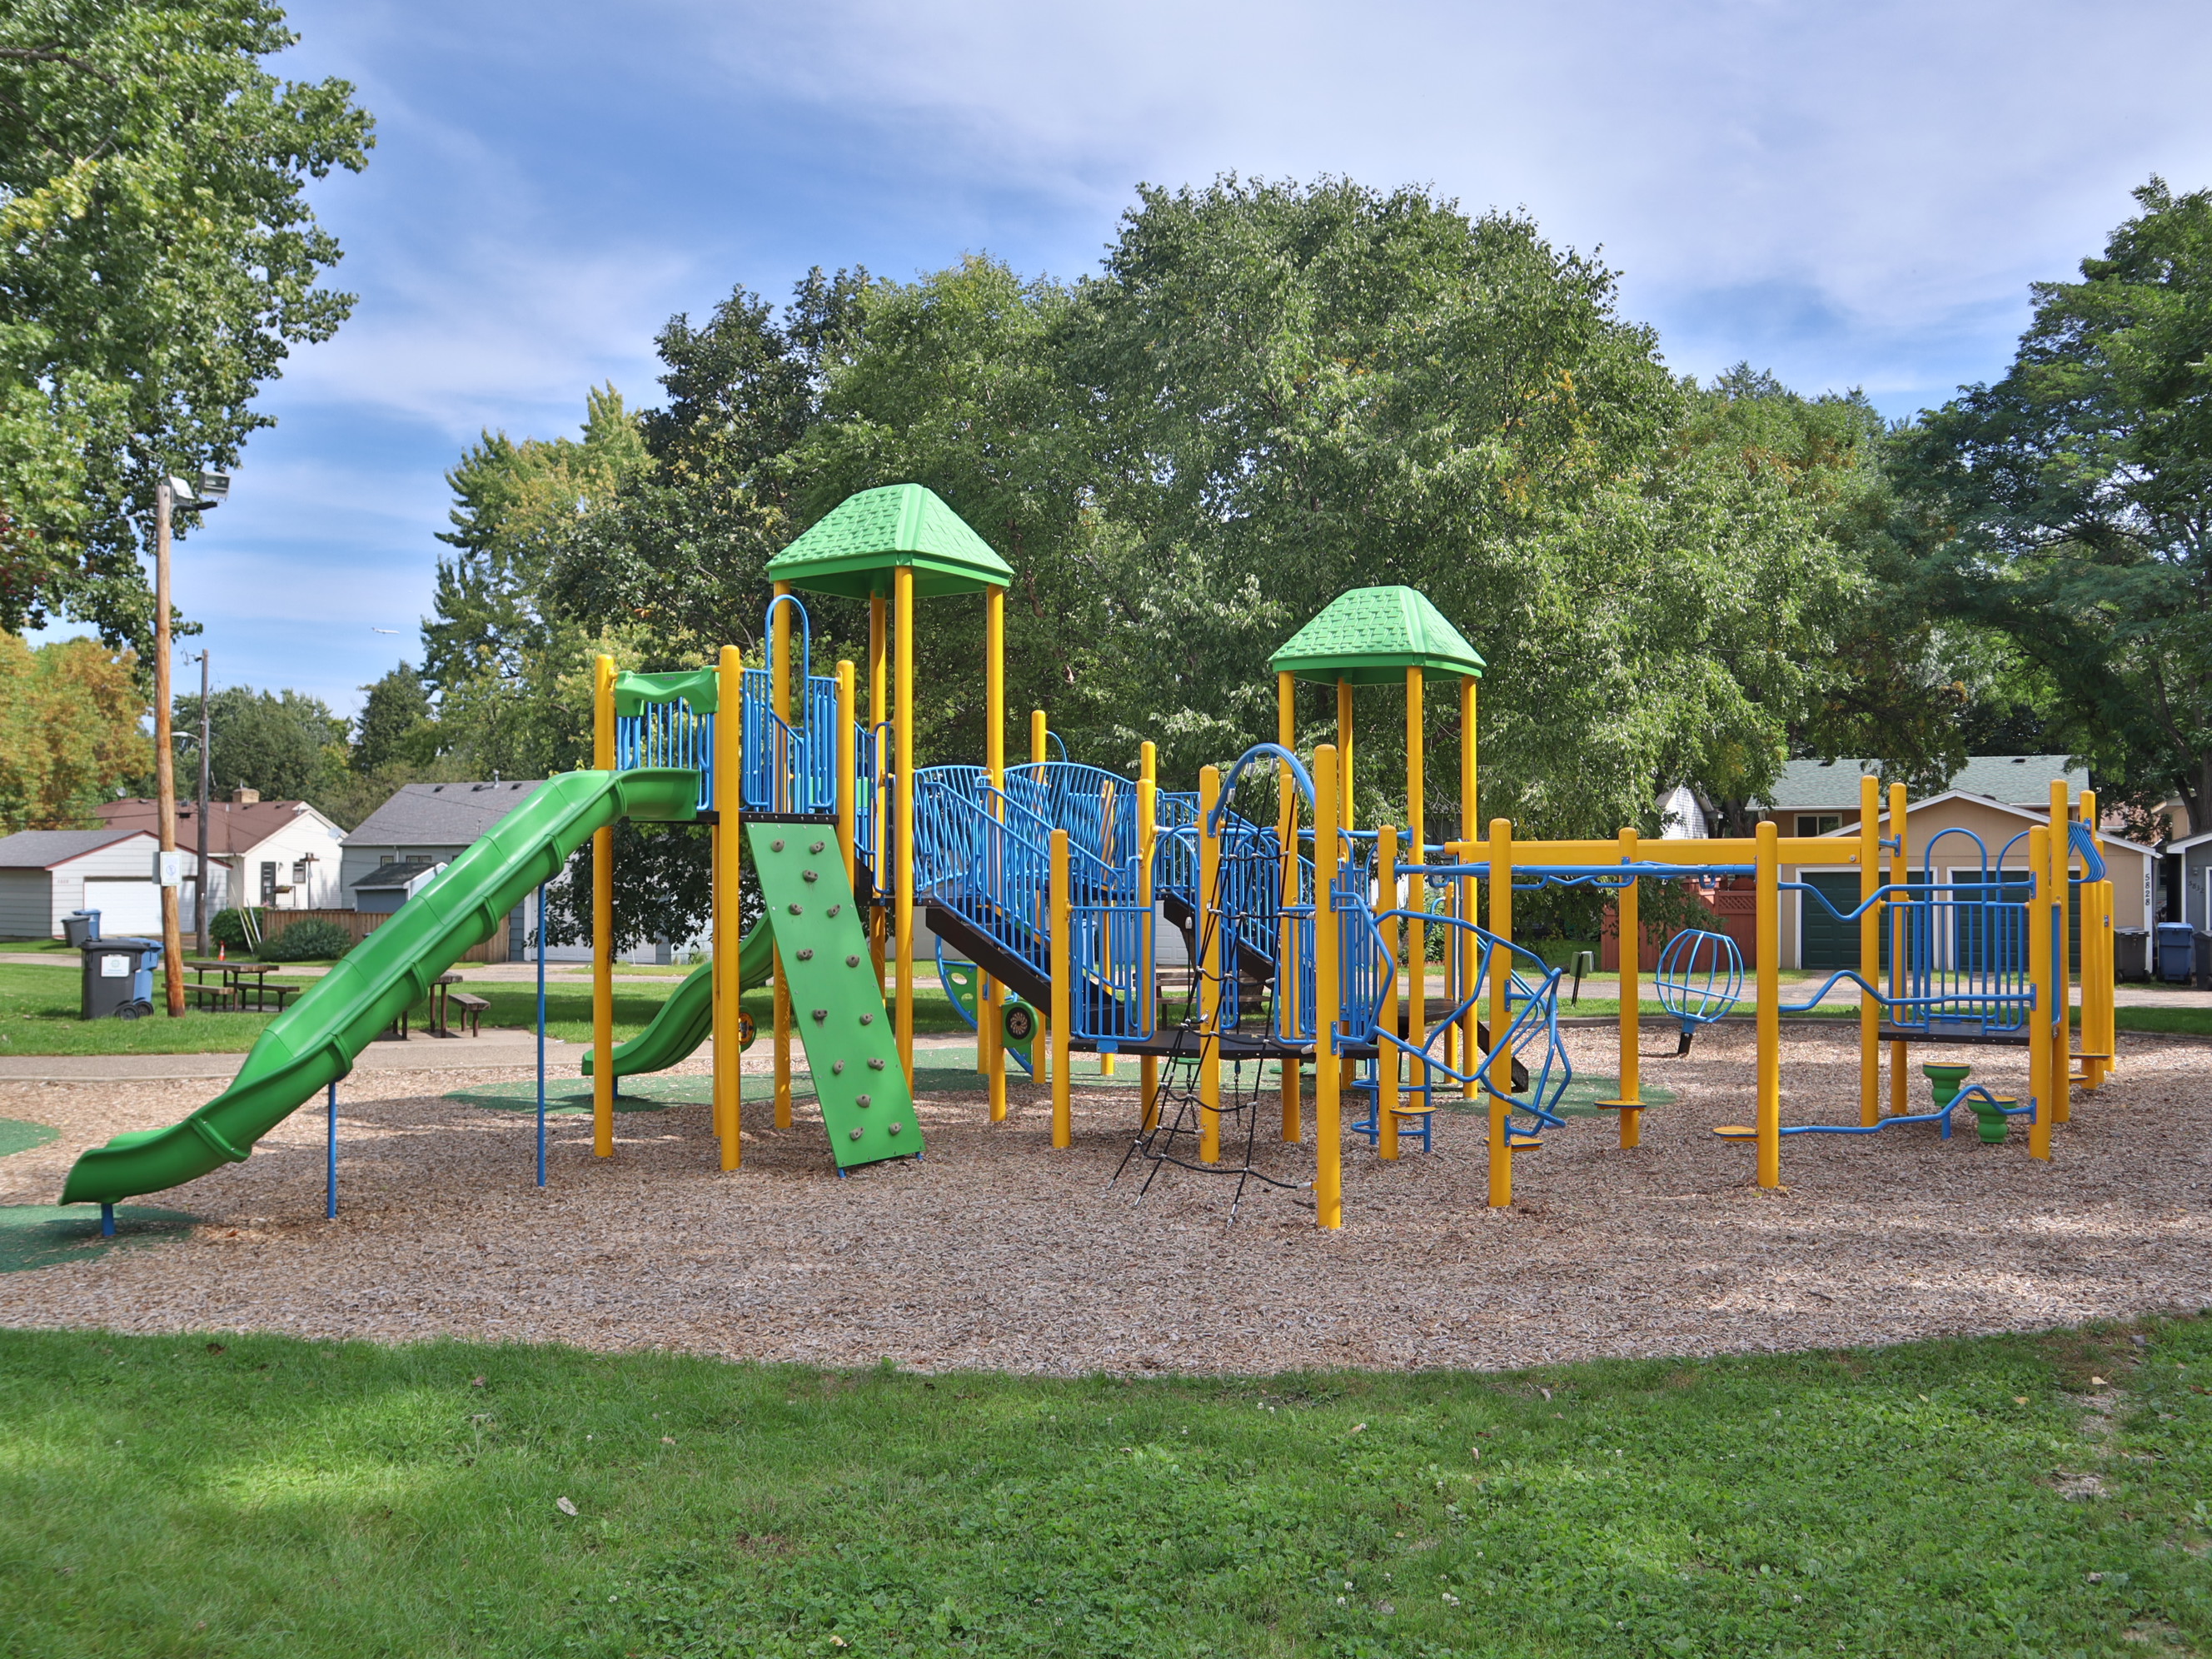 Washburn Park Playground in Minneapolis, MN